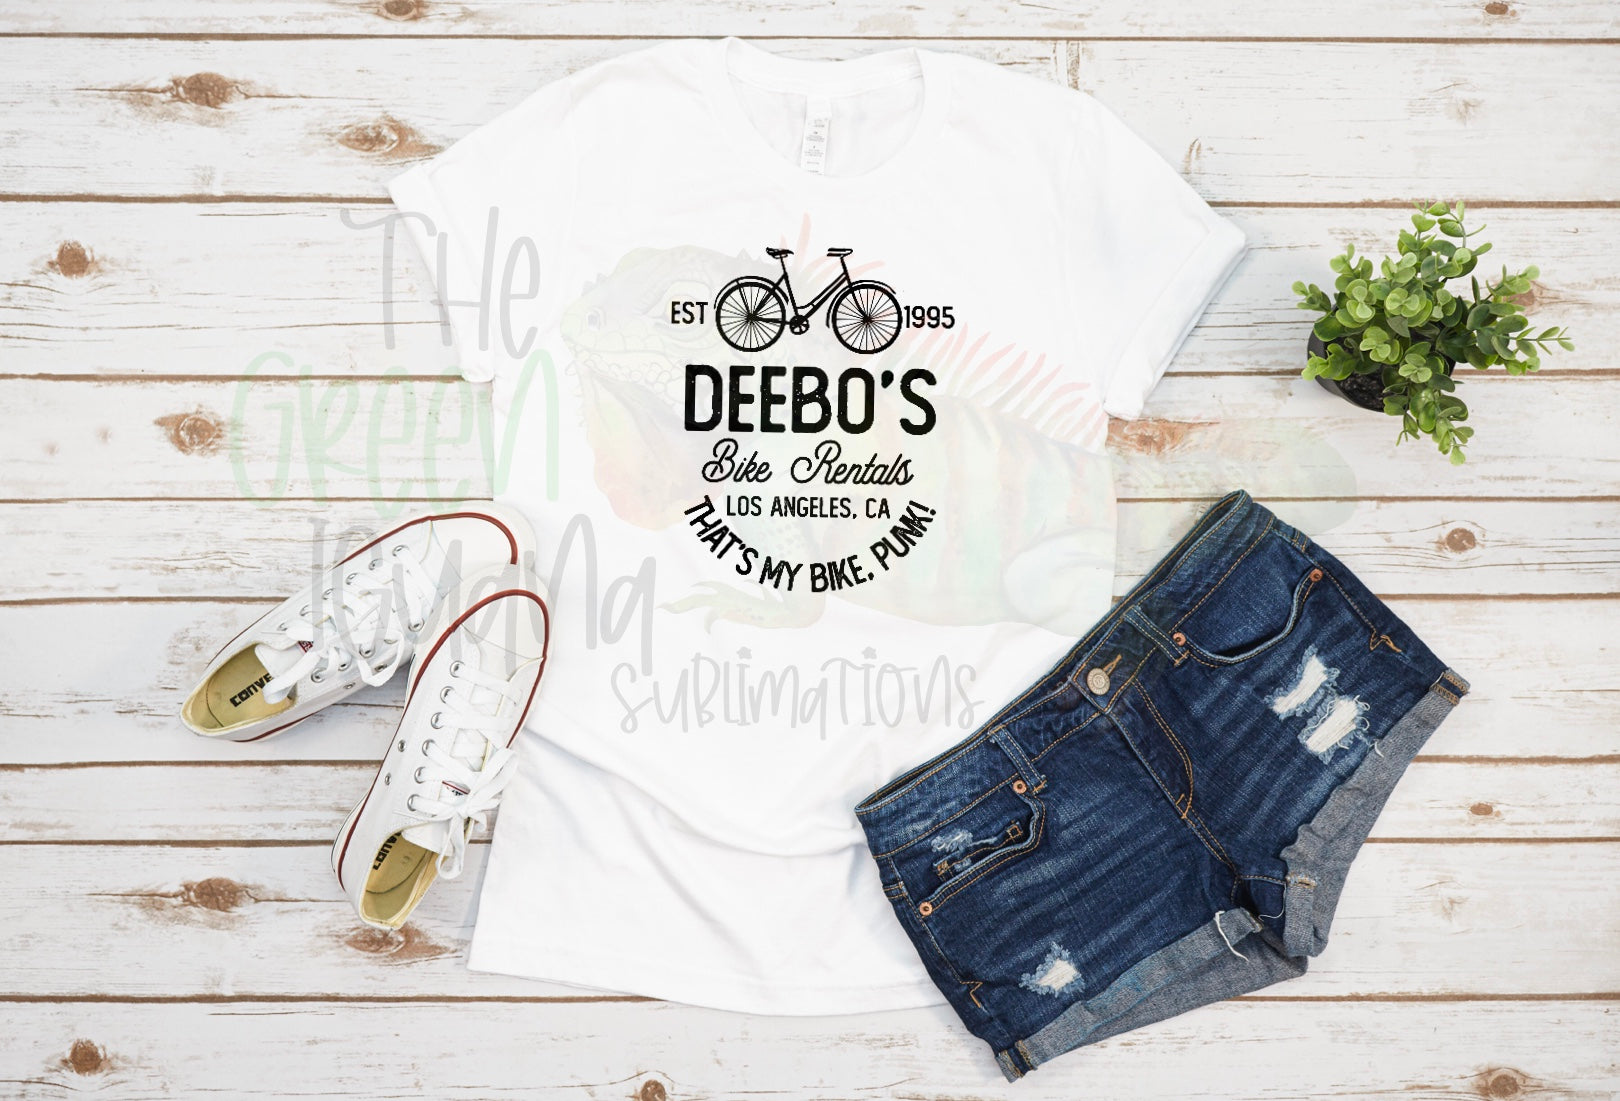 Deebo’s Bike Rentals